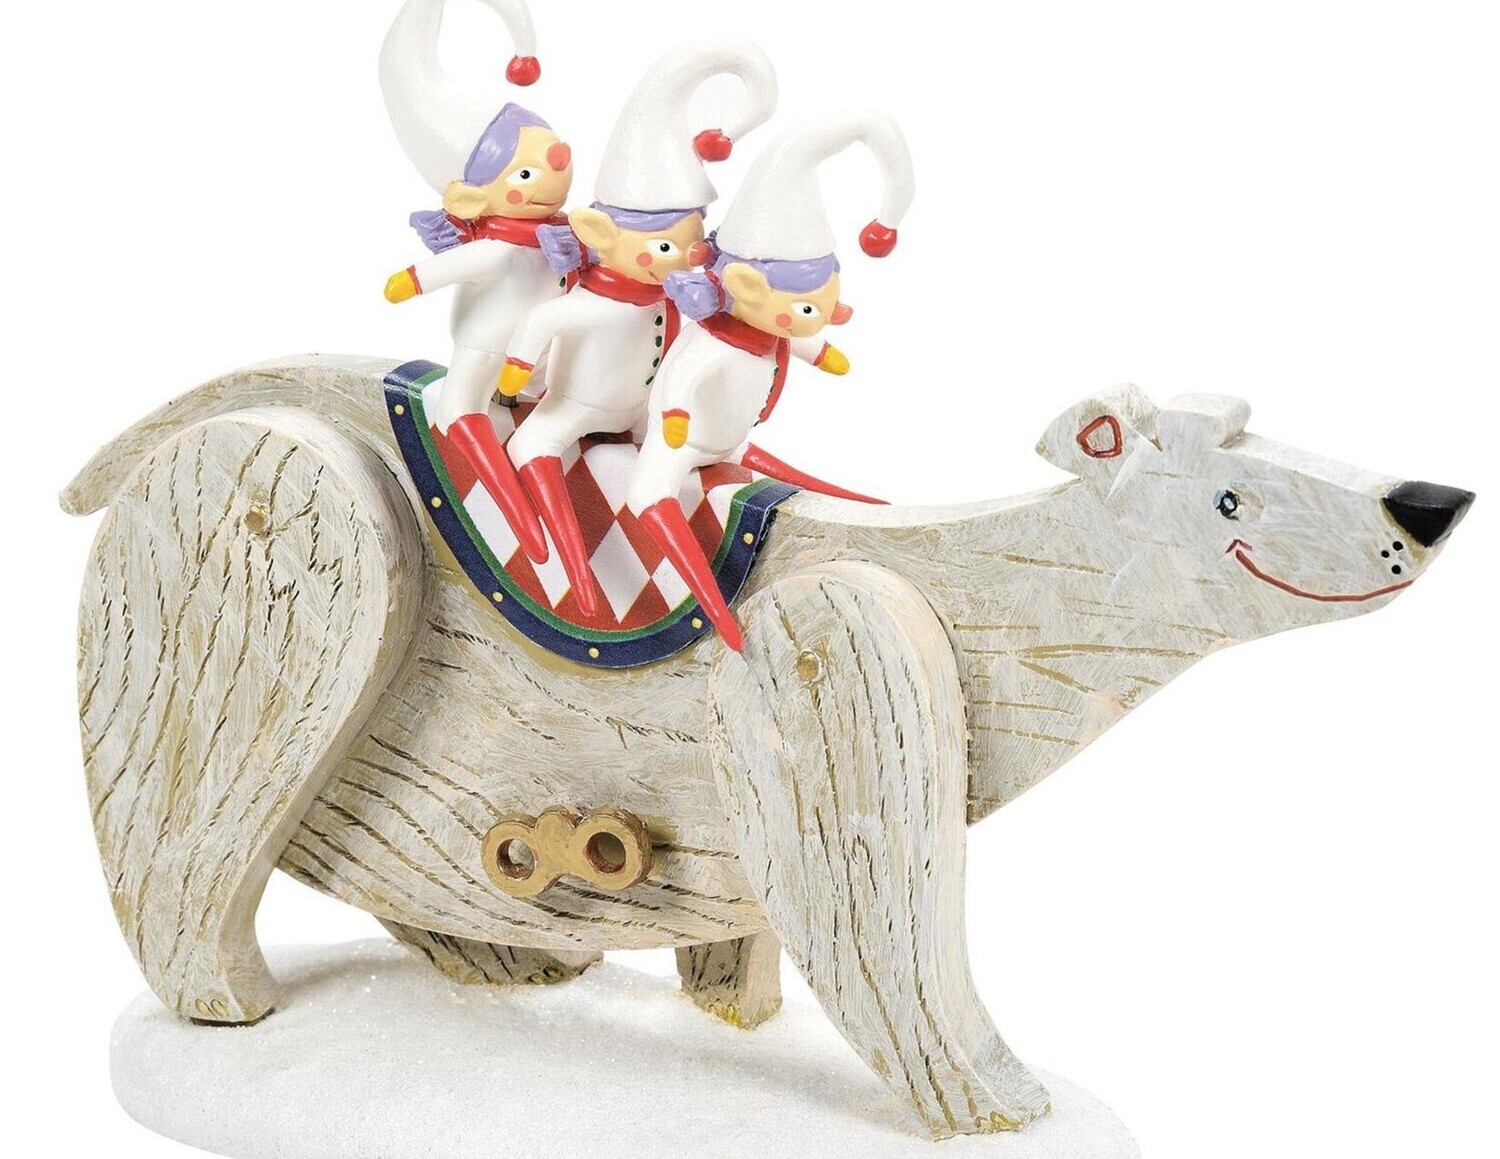 Department 56 The Nightmare Before Christmas Village "Polar Bear Ride" Figurine (6012294)